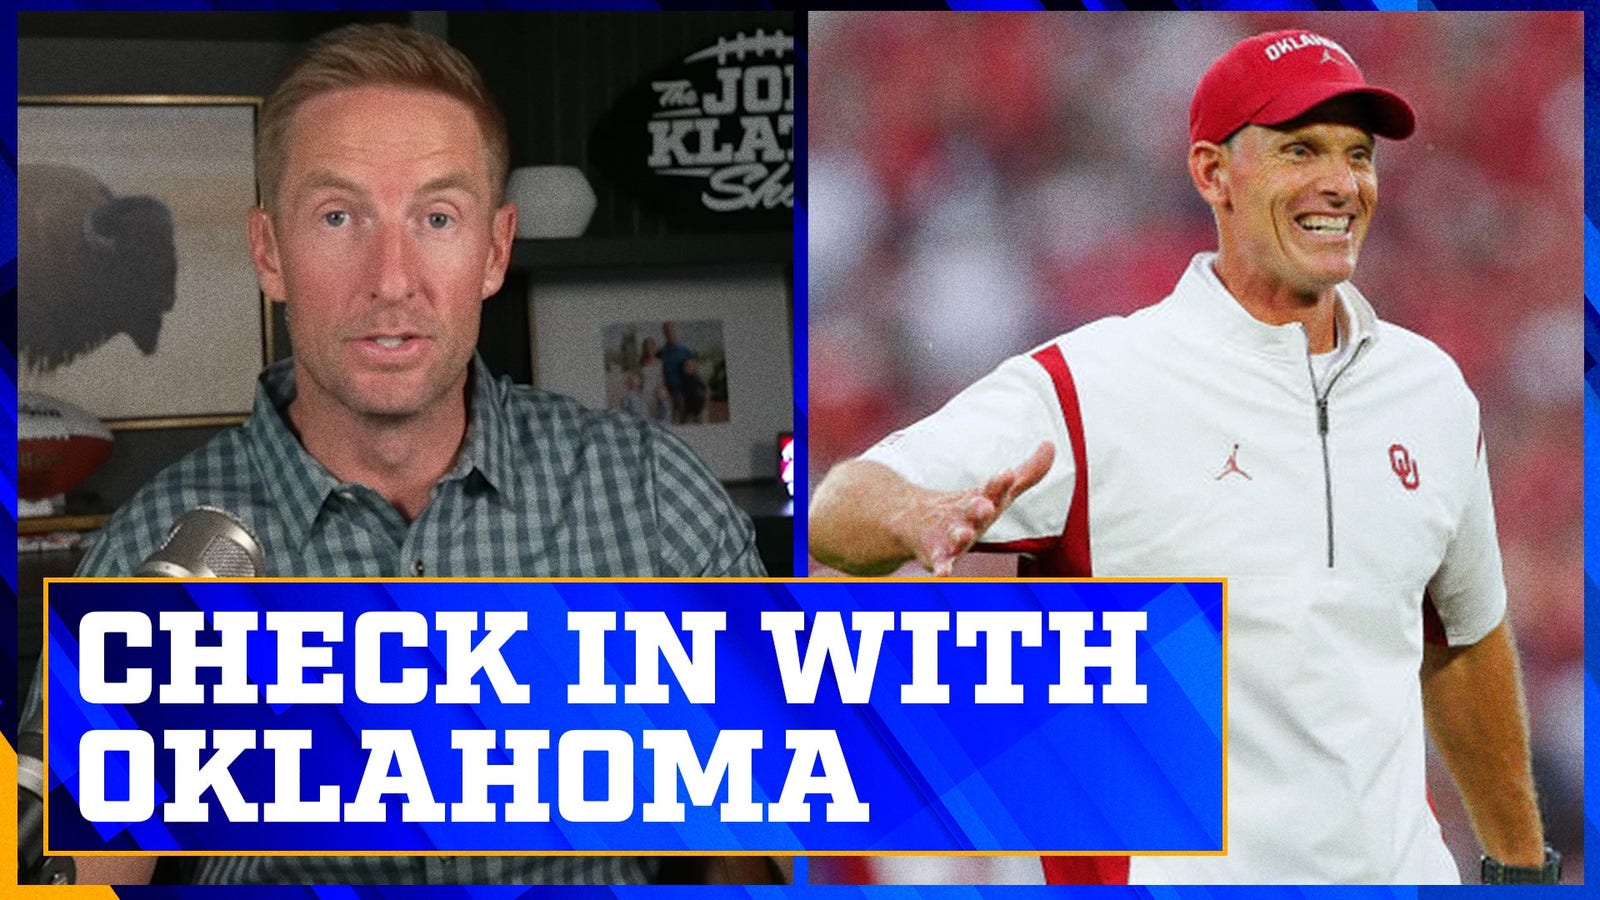 Can Oklahoma end their season strong? | Joel Klatt Show